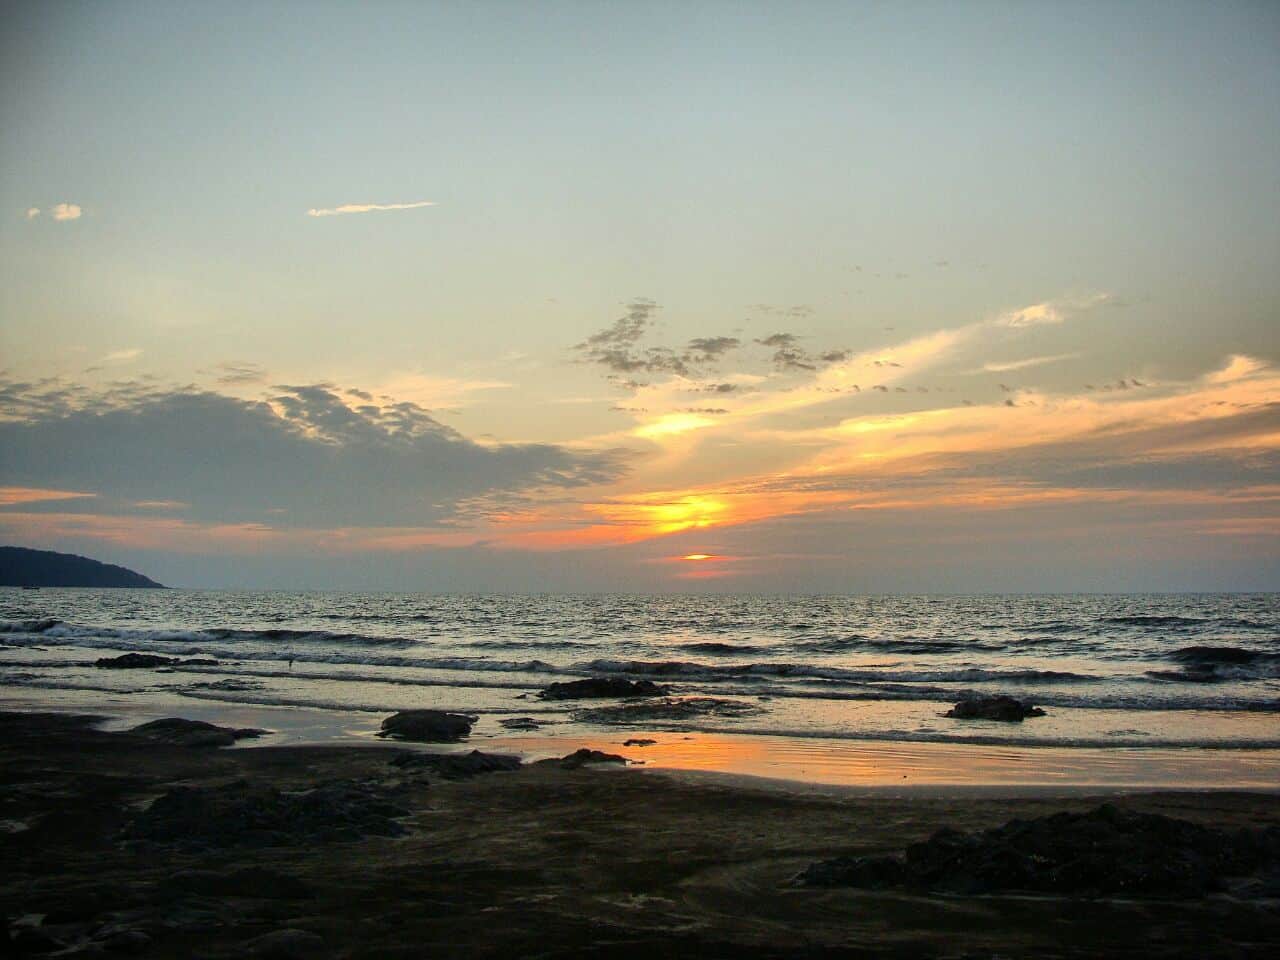 Sunset at Ladghar beach in Konkan